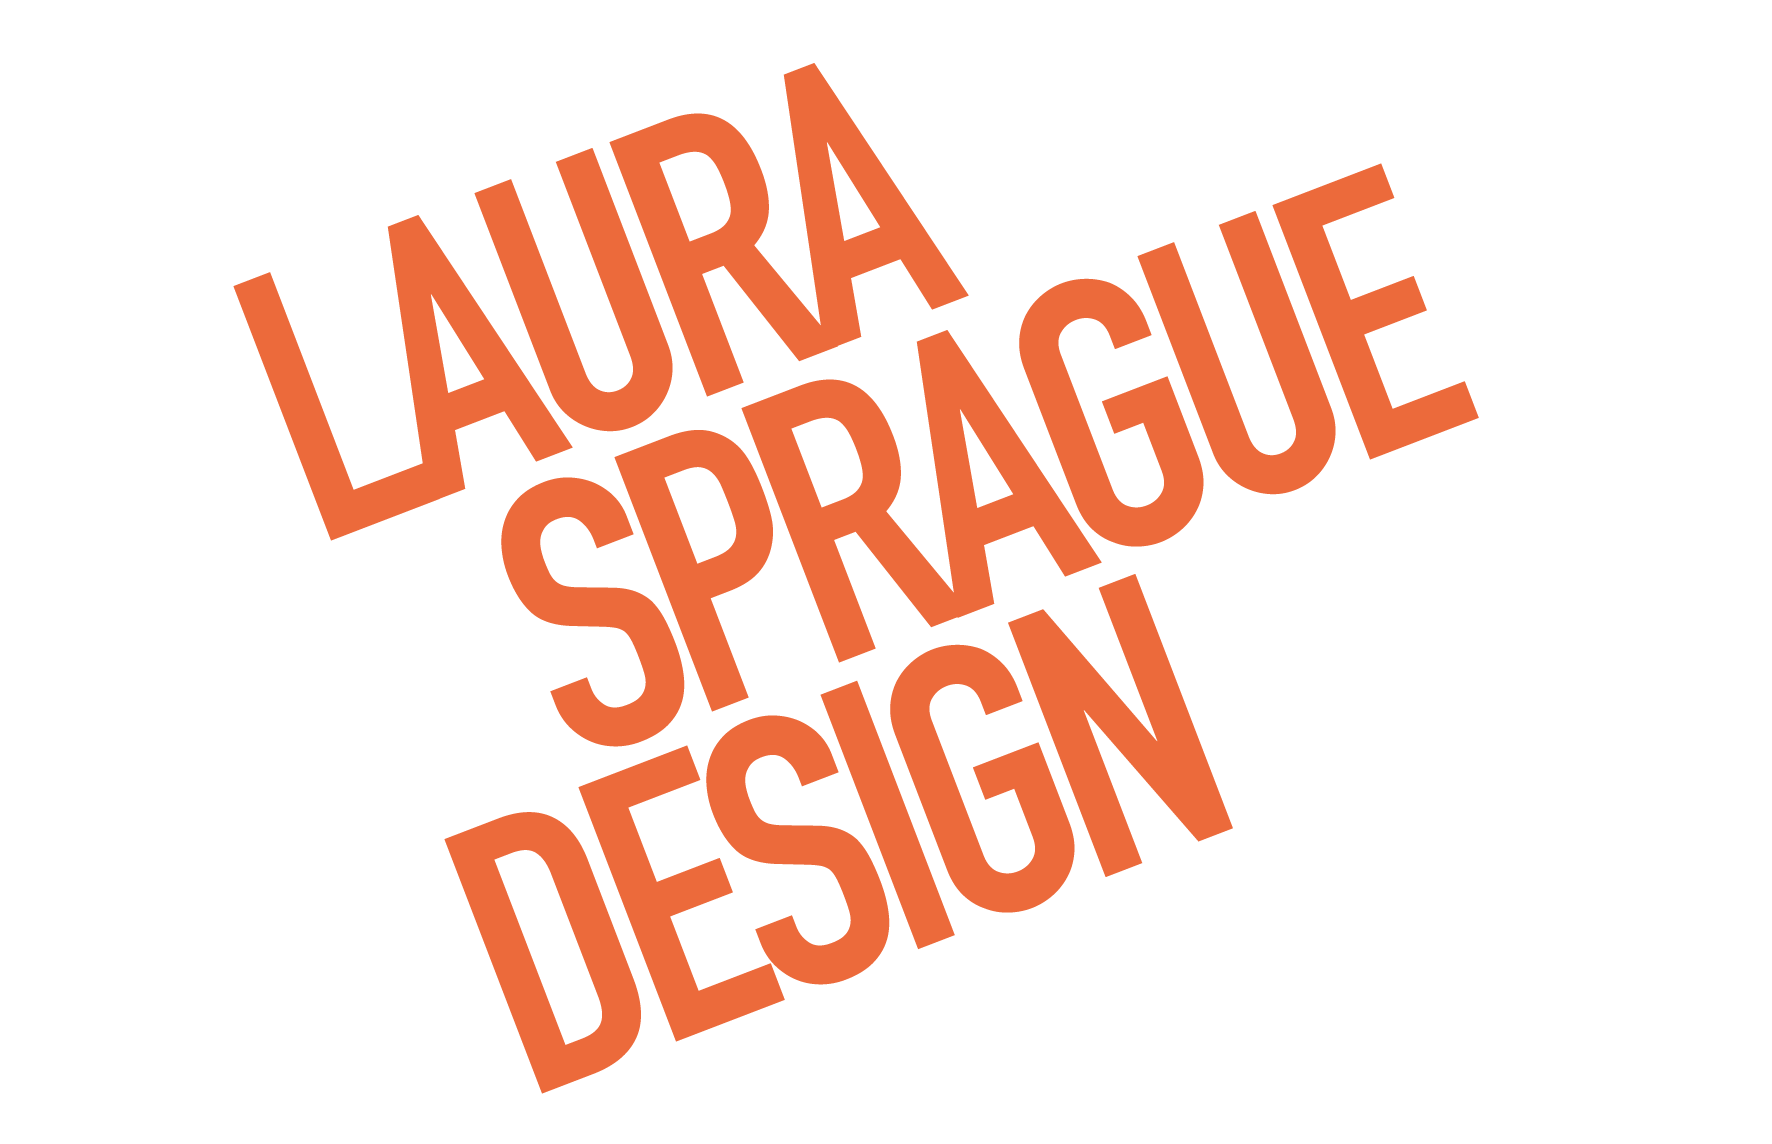 Laura Sprague